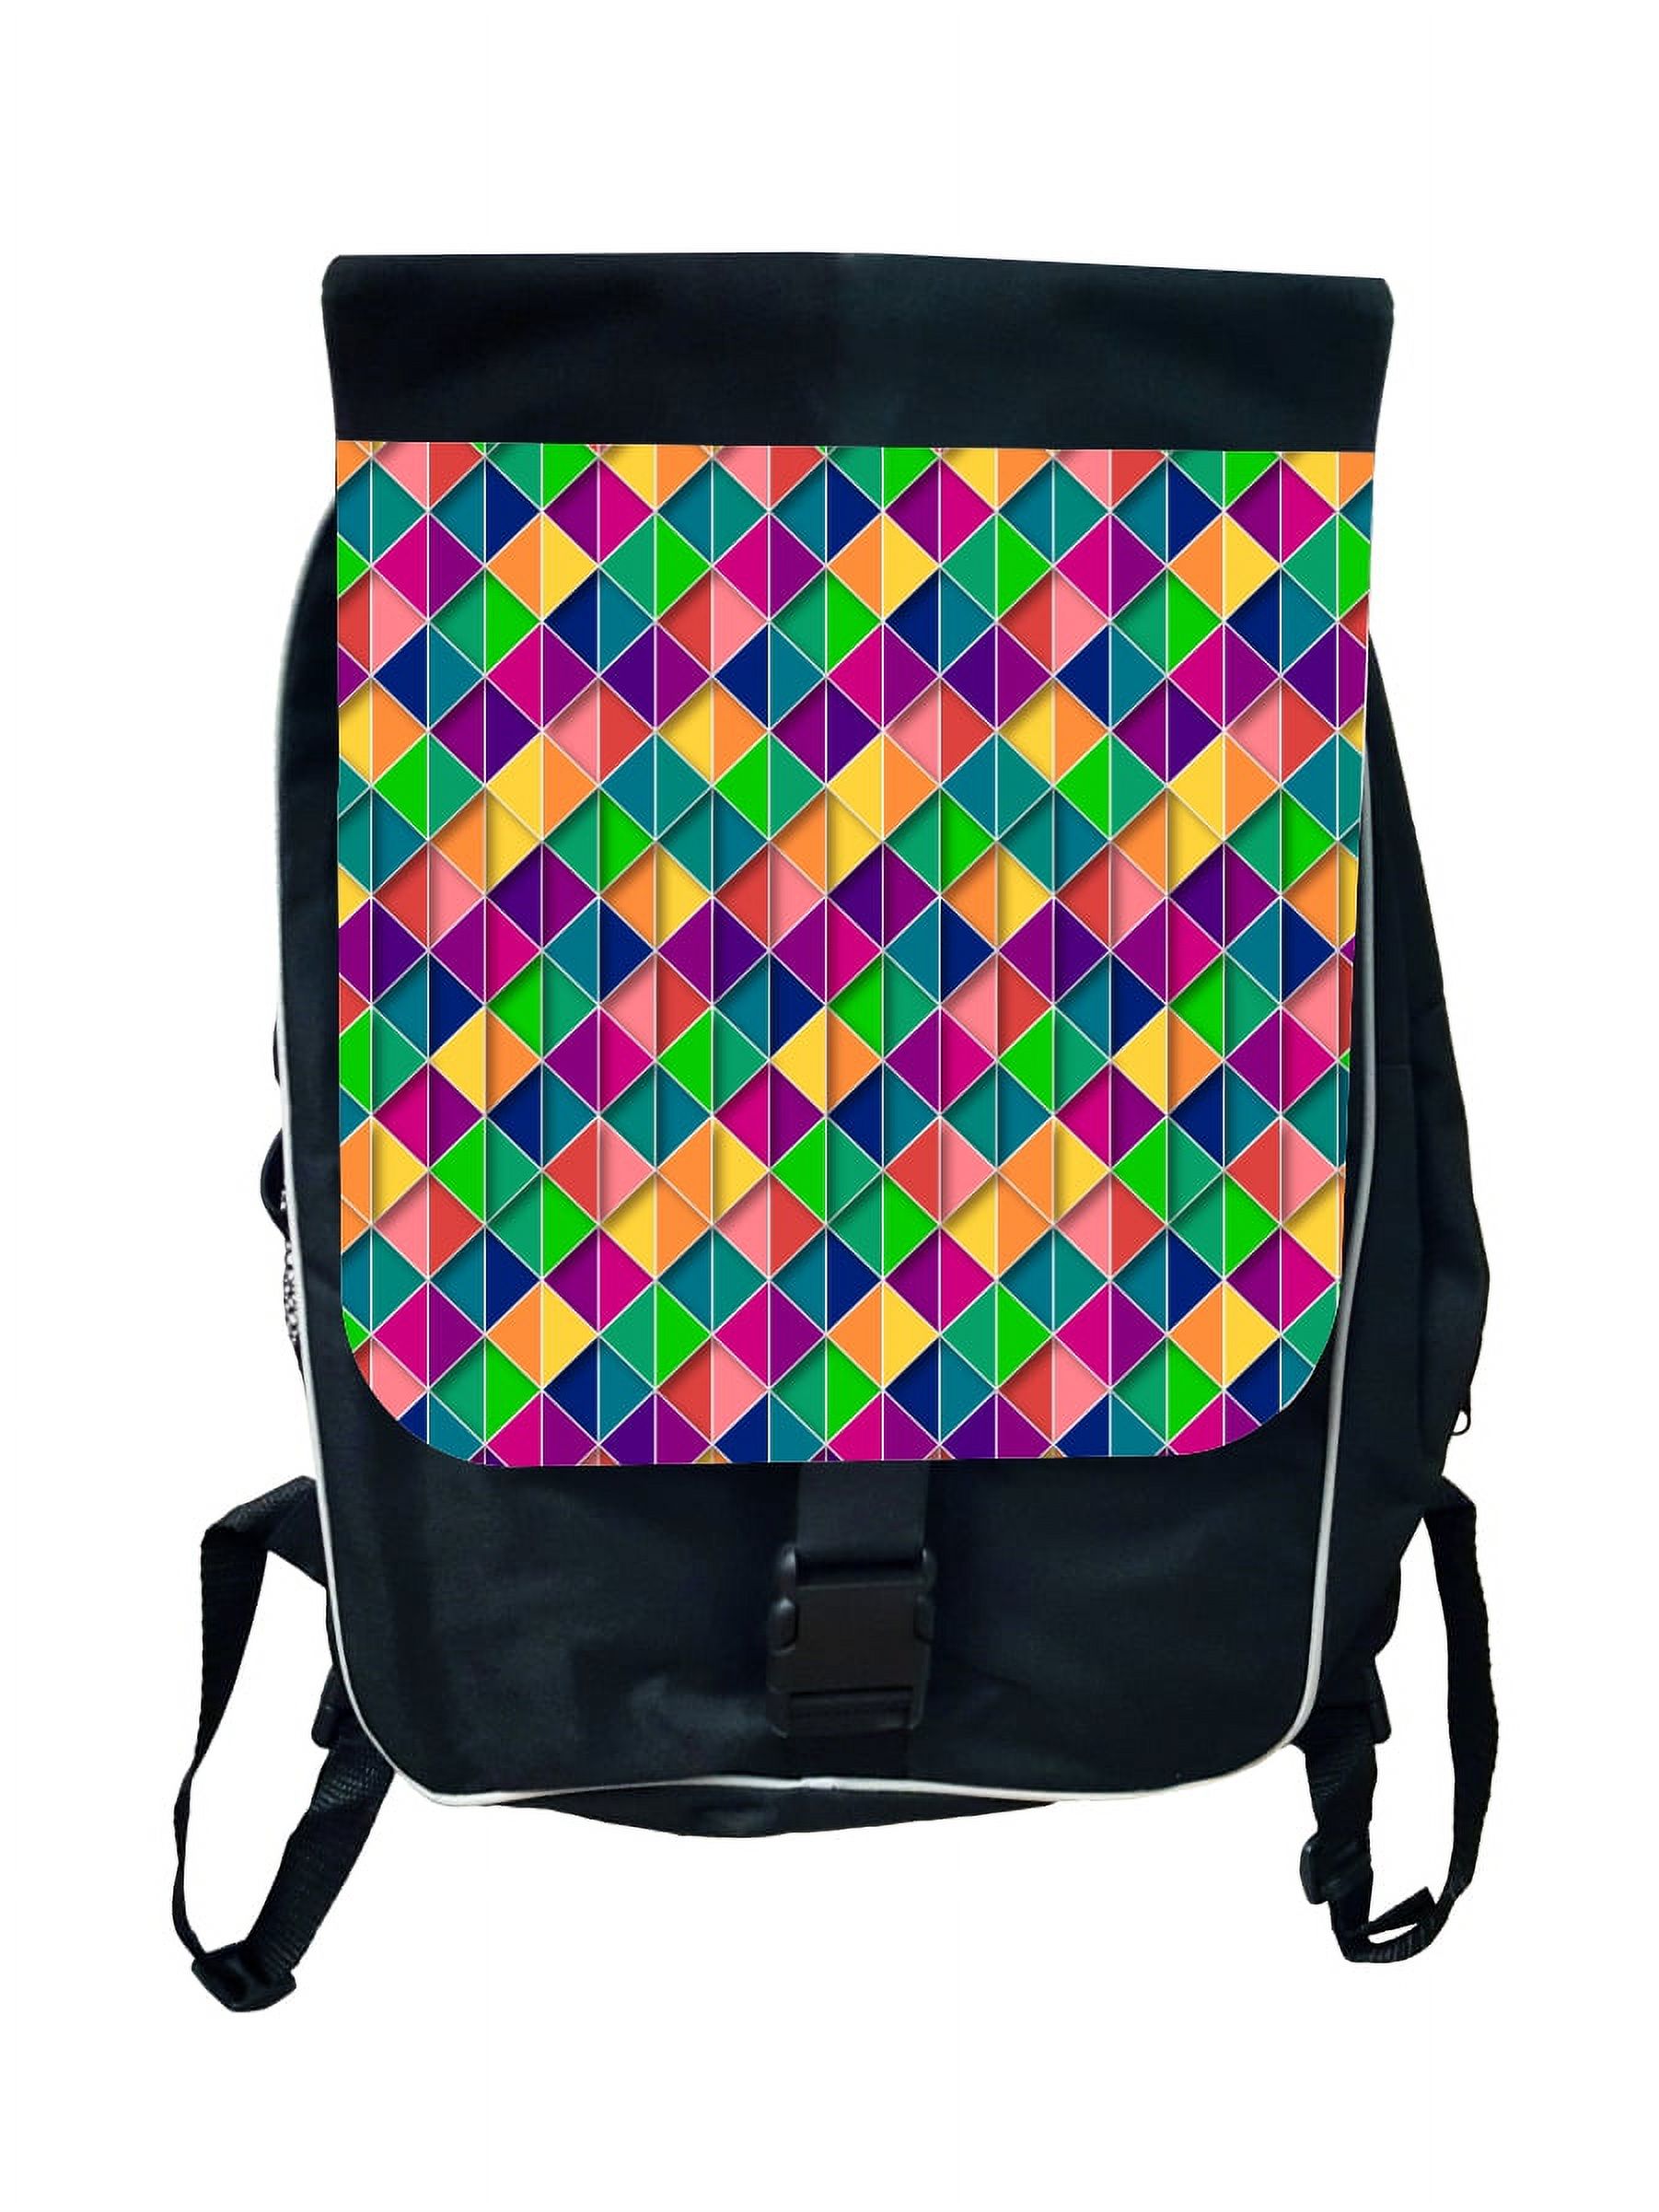 Retro Geometric Print Large School Backpack - image 1 of 5